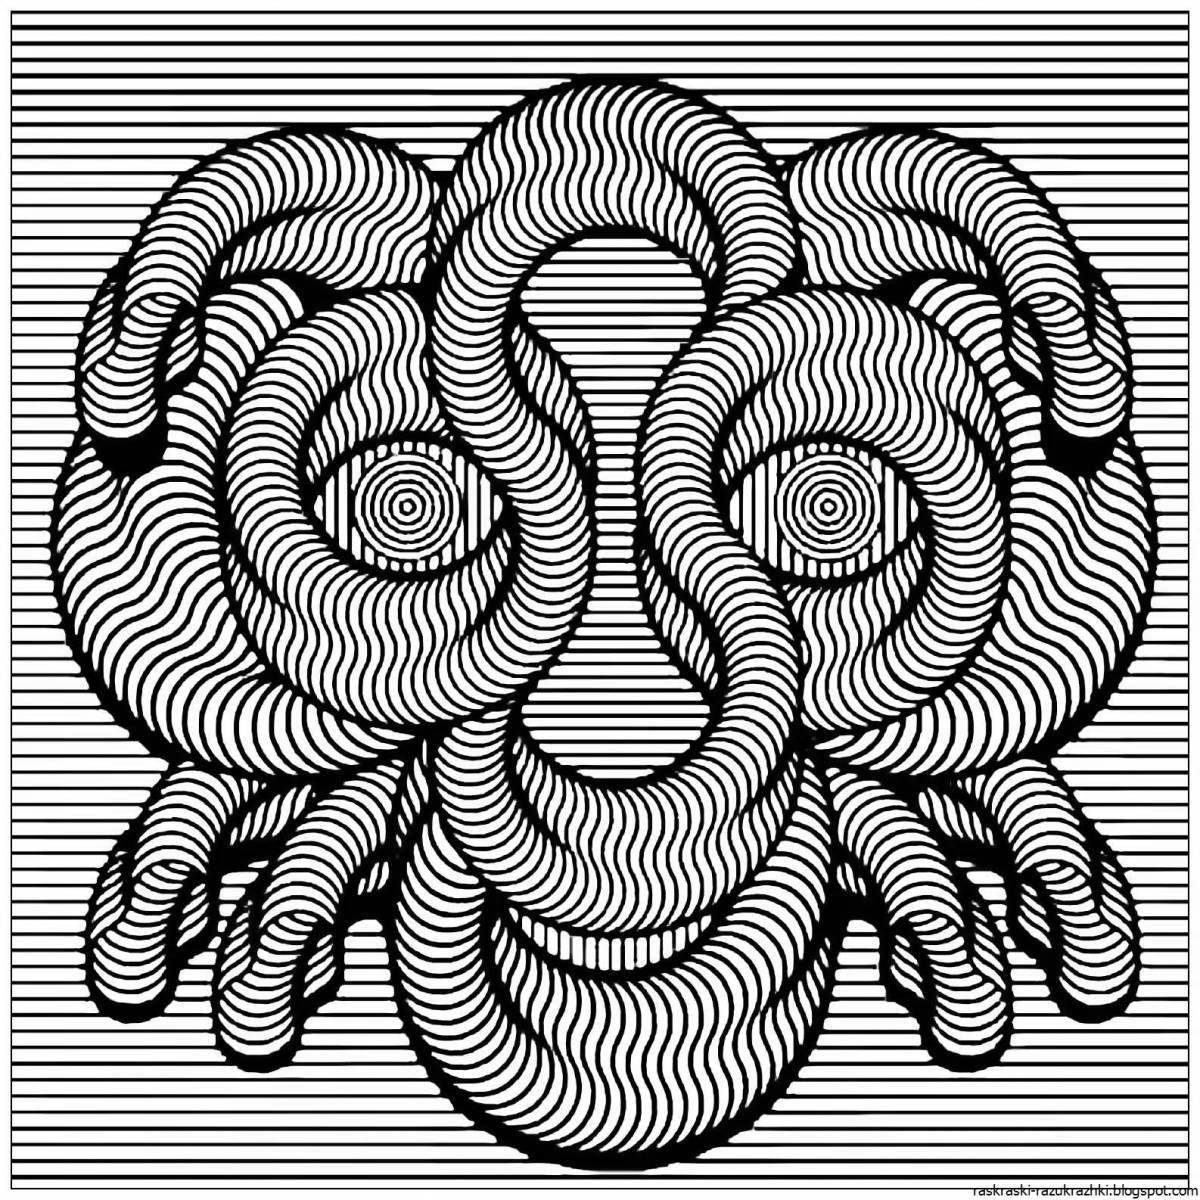 Delightful coloring hidden spiral pattern